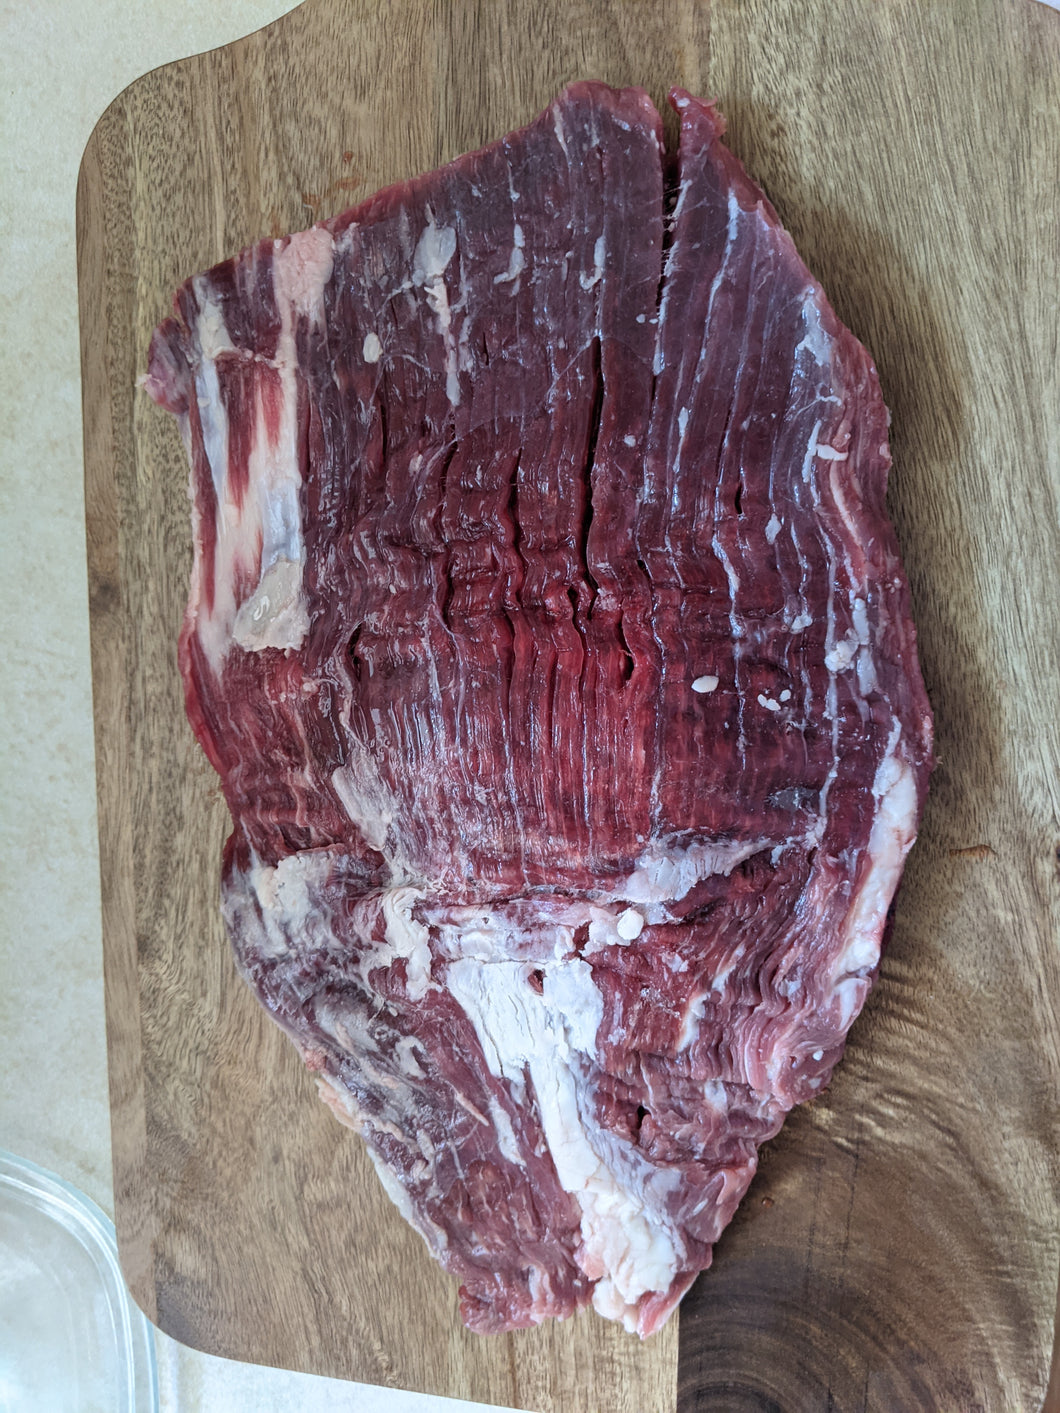 Wagyu Flank Steak 1.36 - 1.5 pounds